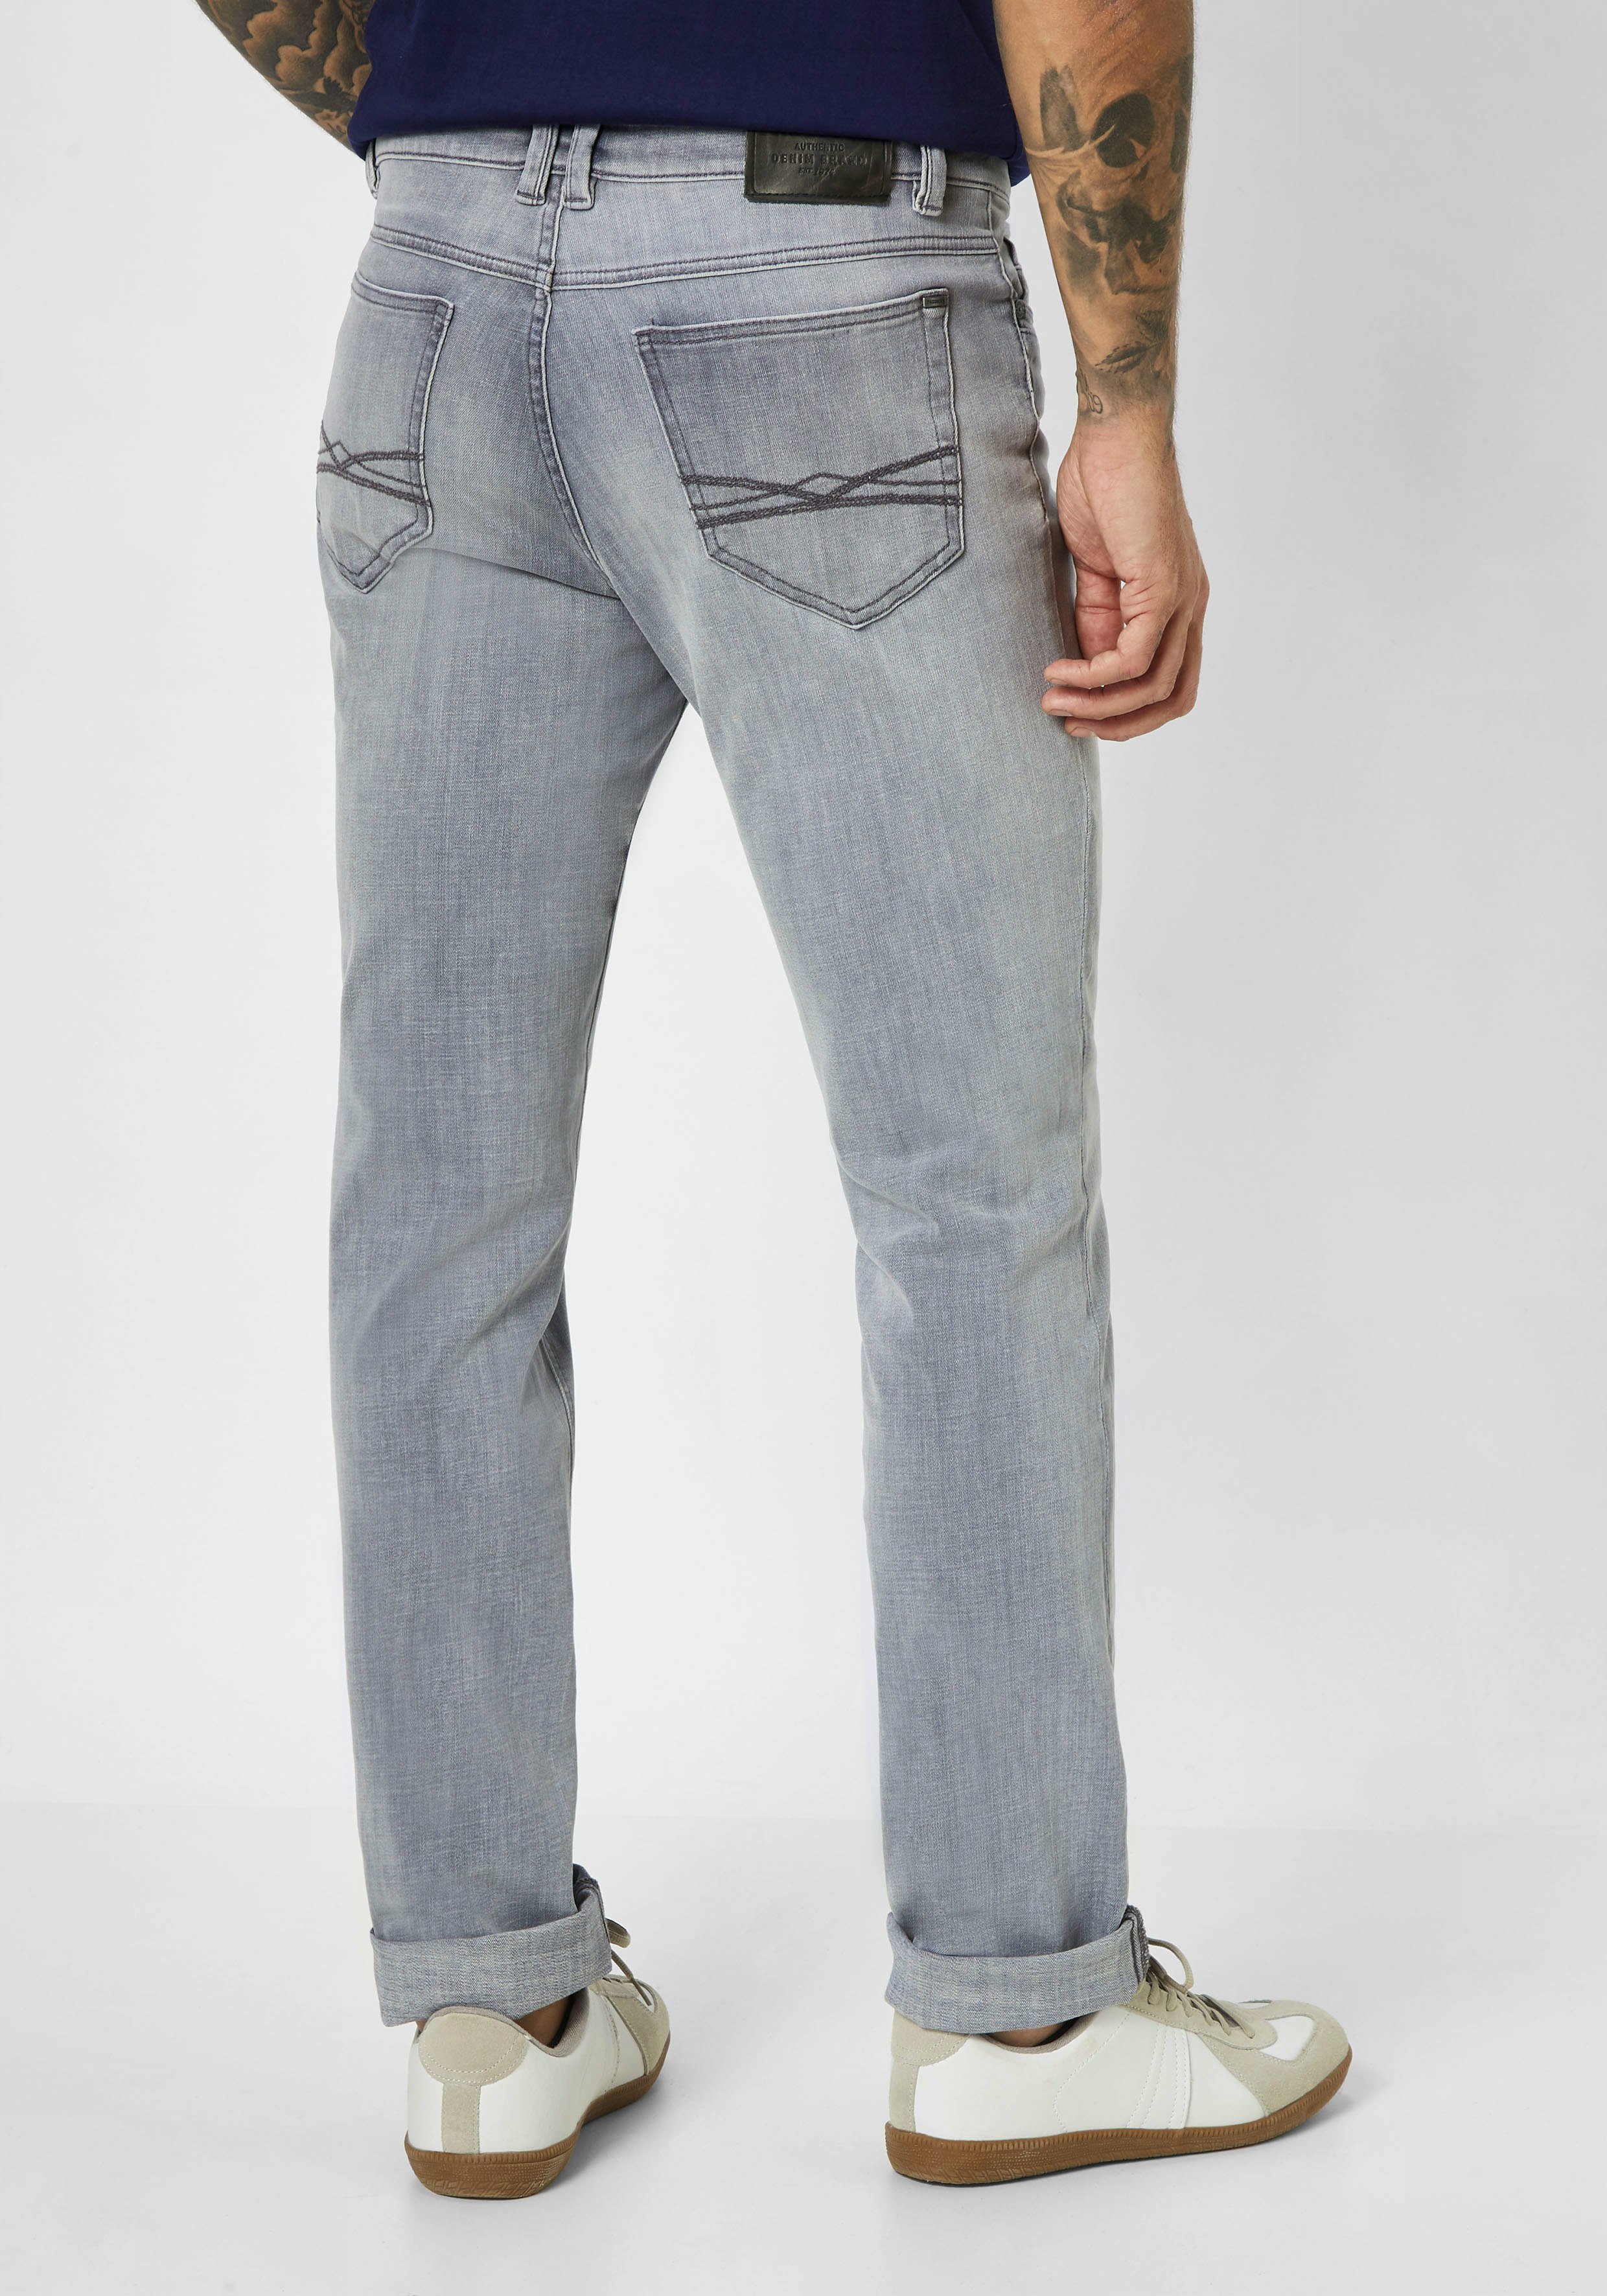 Paddock's Jeans  Ranger  Pipe extra lang grey